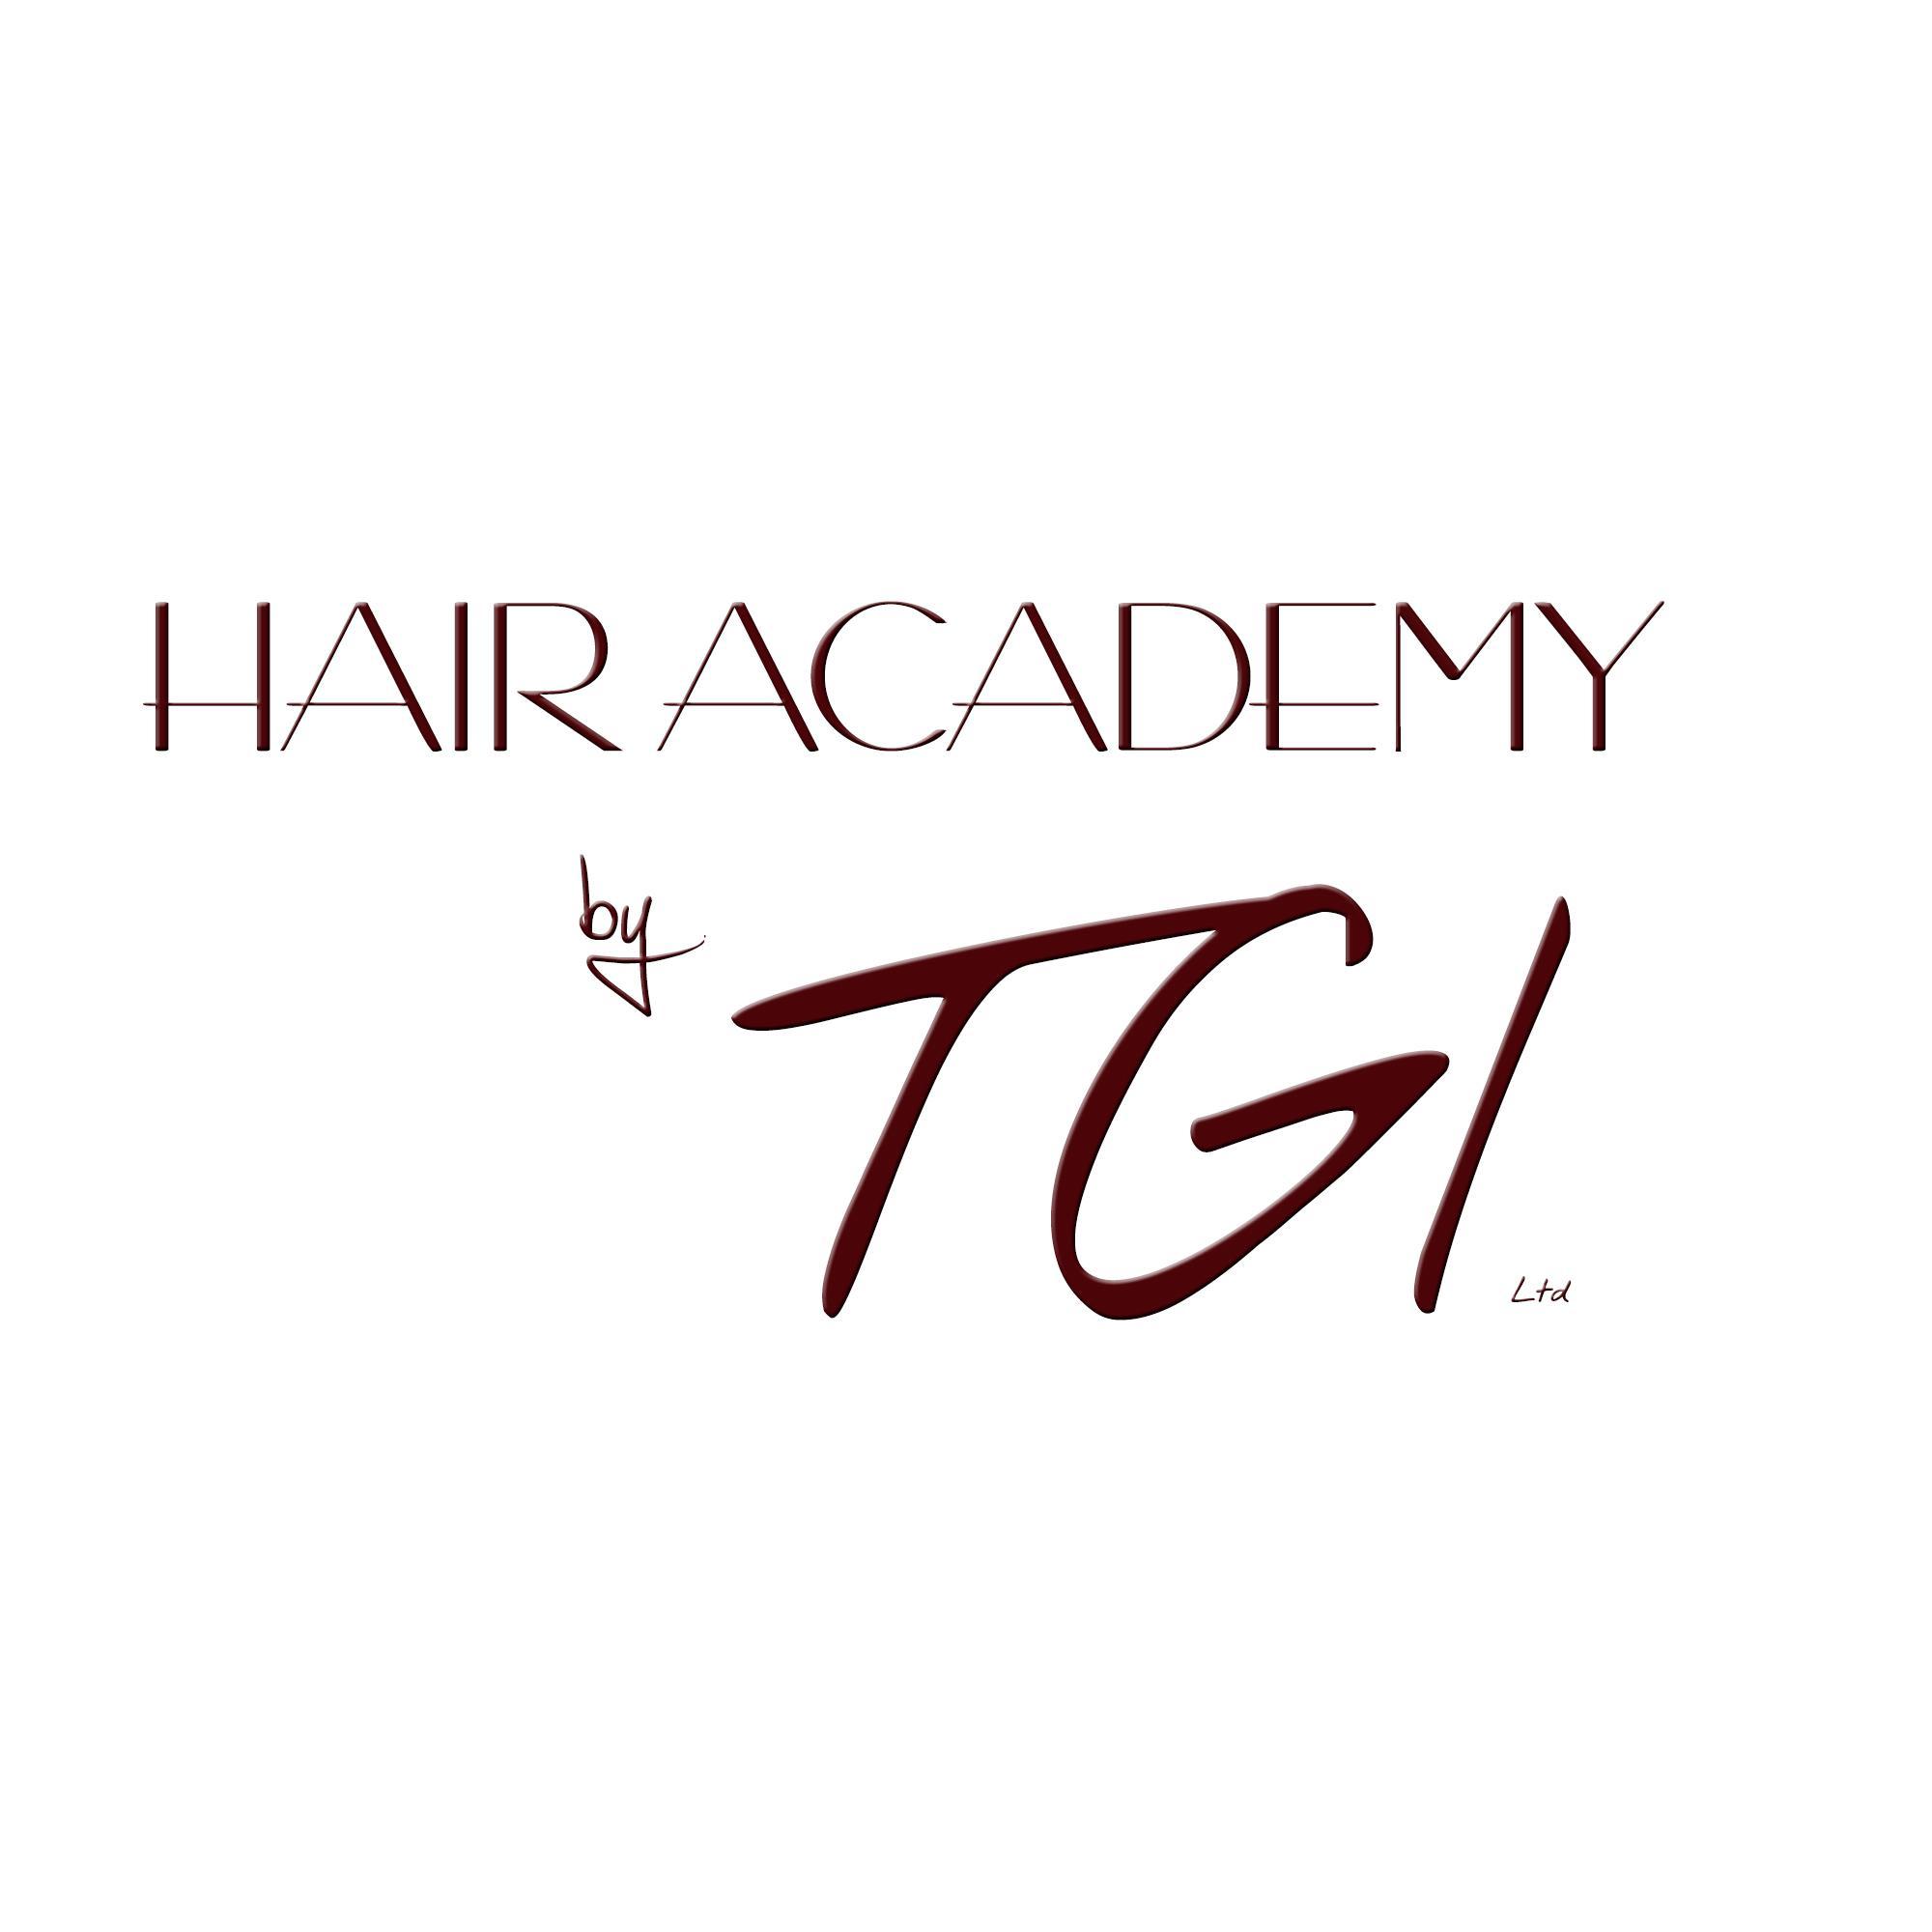 Hair Academy By T G I Ltd - Bradford, West Yorkshire BD1 1SX - 01274 505705 | ShowMeLocal.com